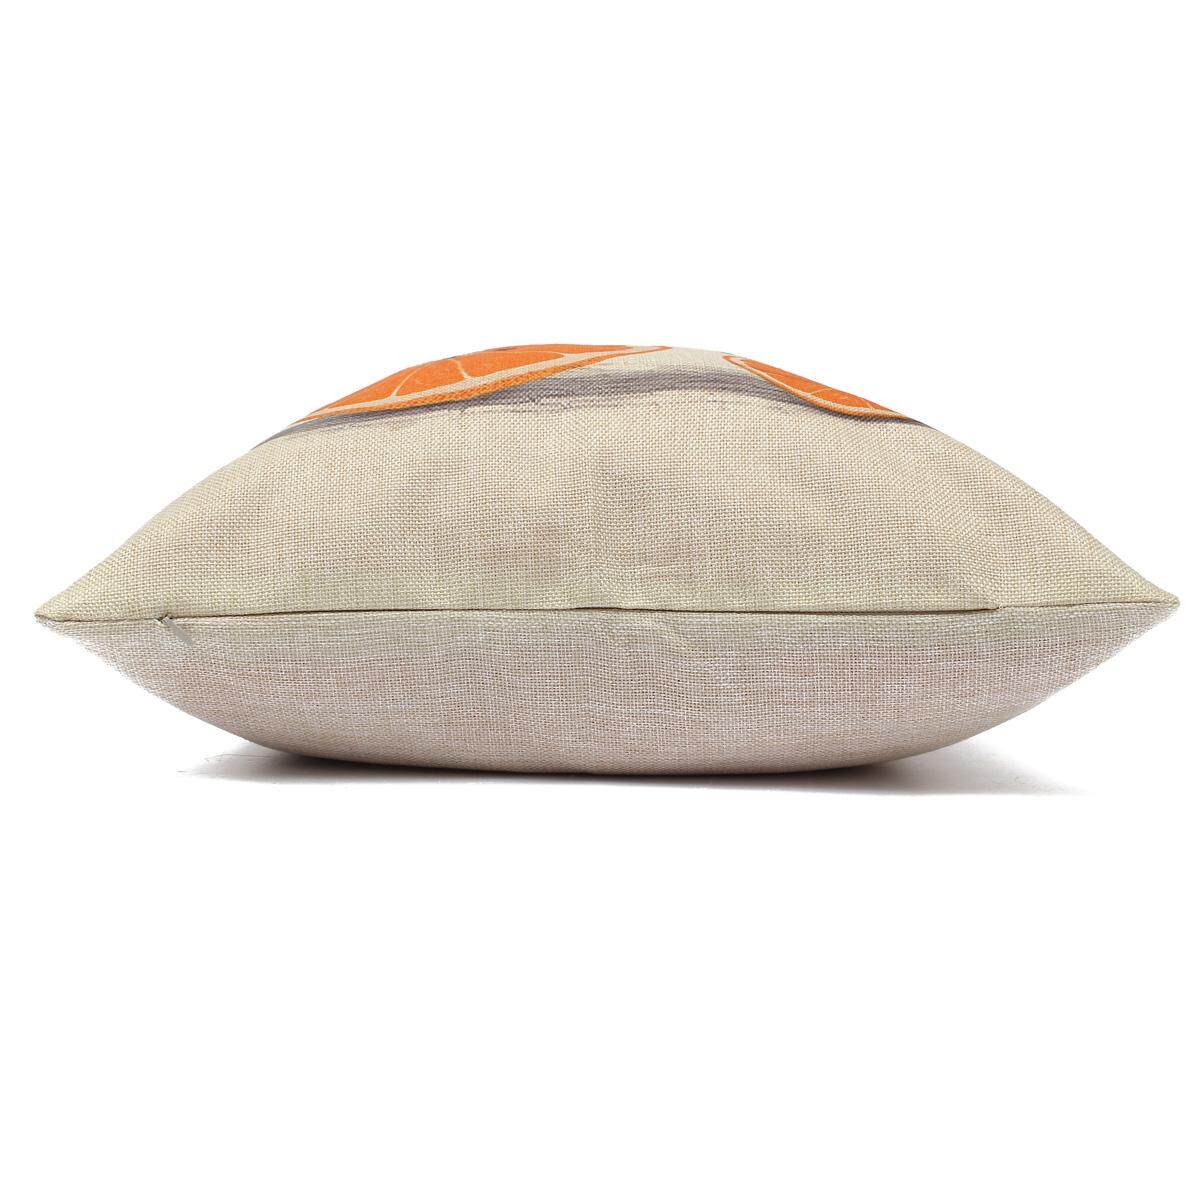 Fashion Throw Pillow Case Cotton Linen Cushion Cover Square Sofa Home Decor Orange - intl